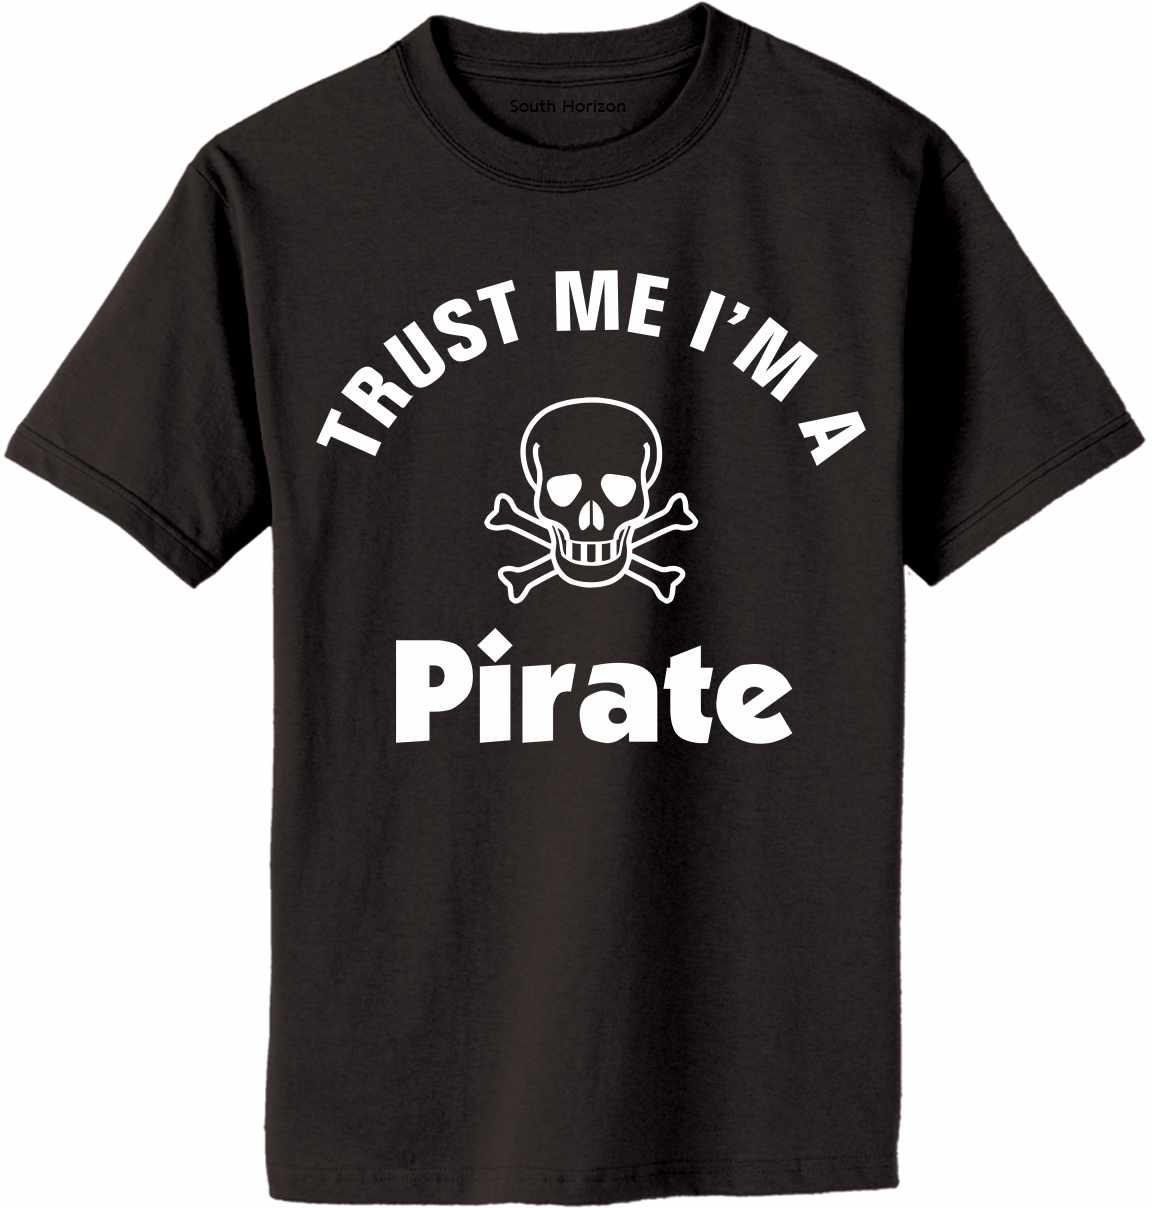 Trust Me I'm a Pirate Adult T-Shirt